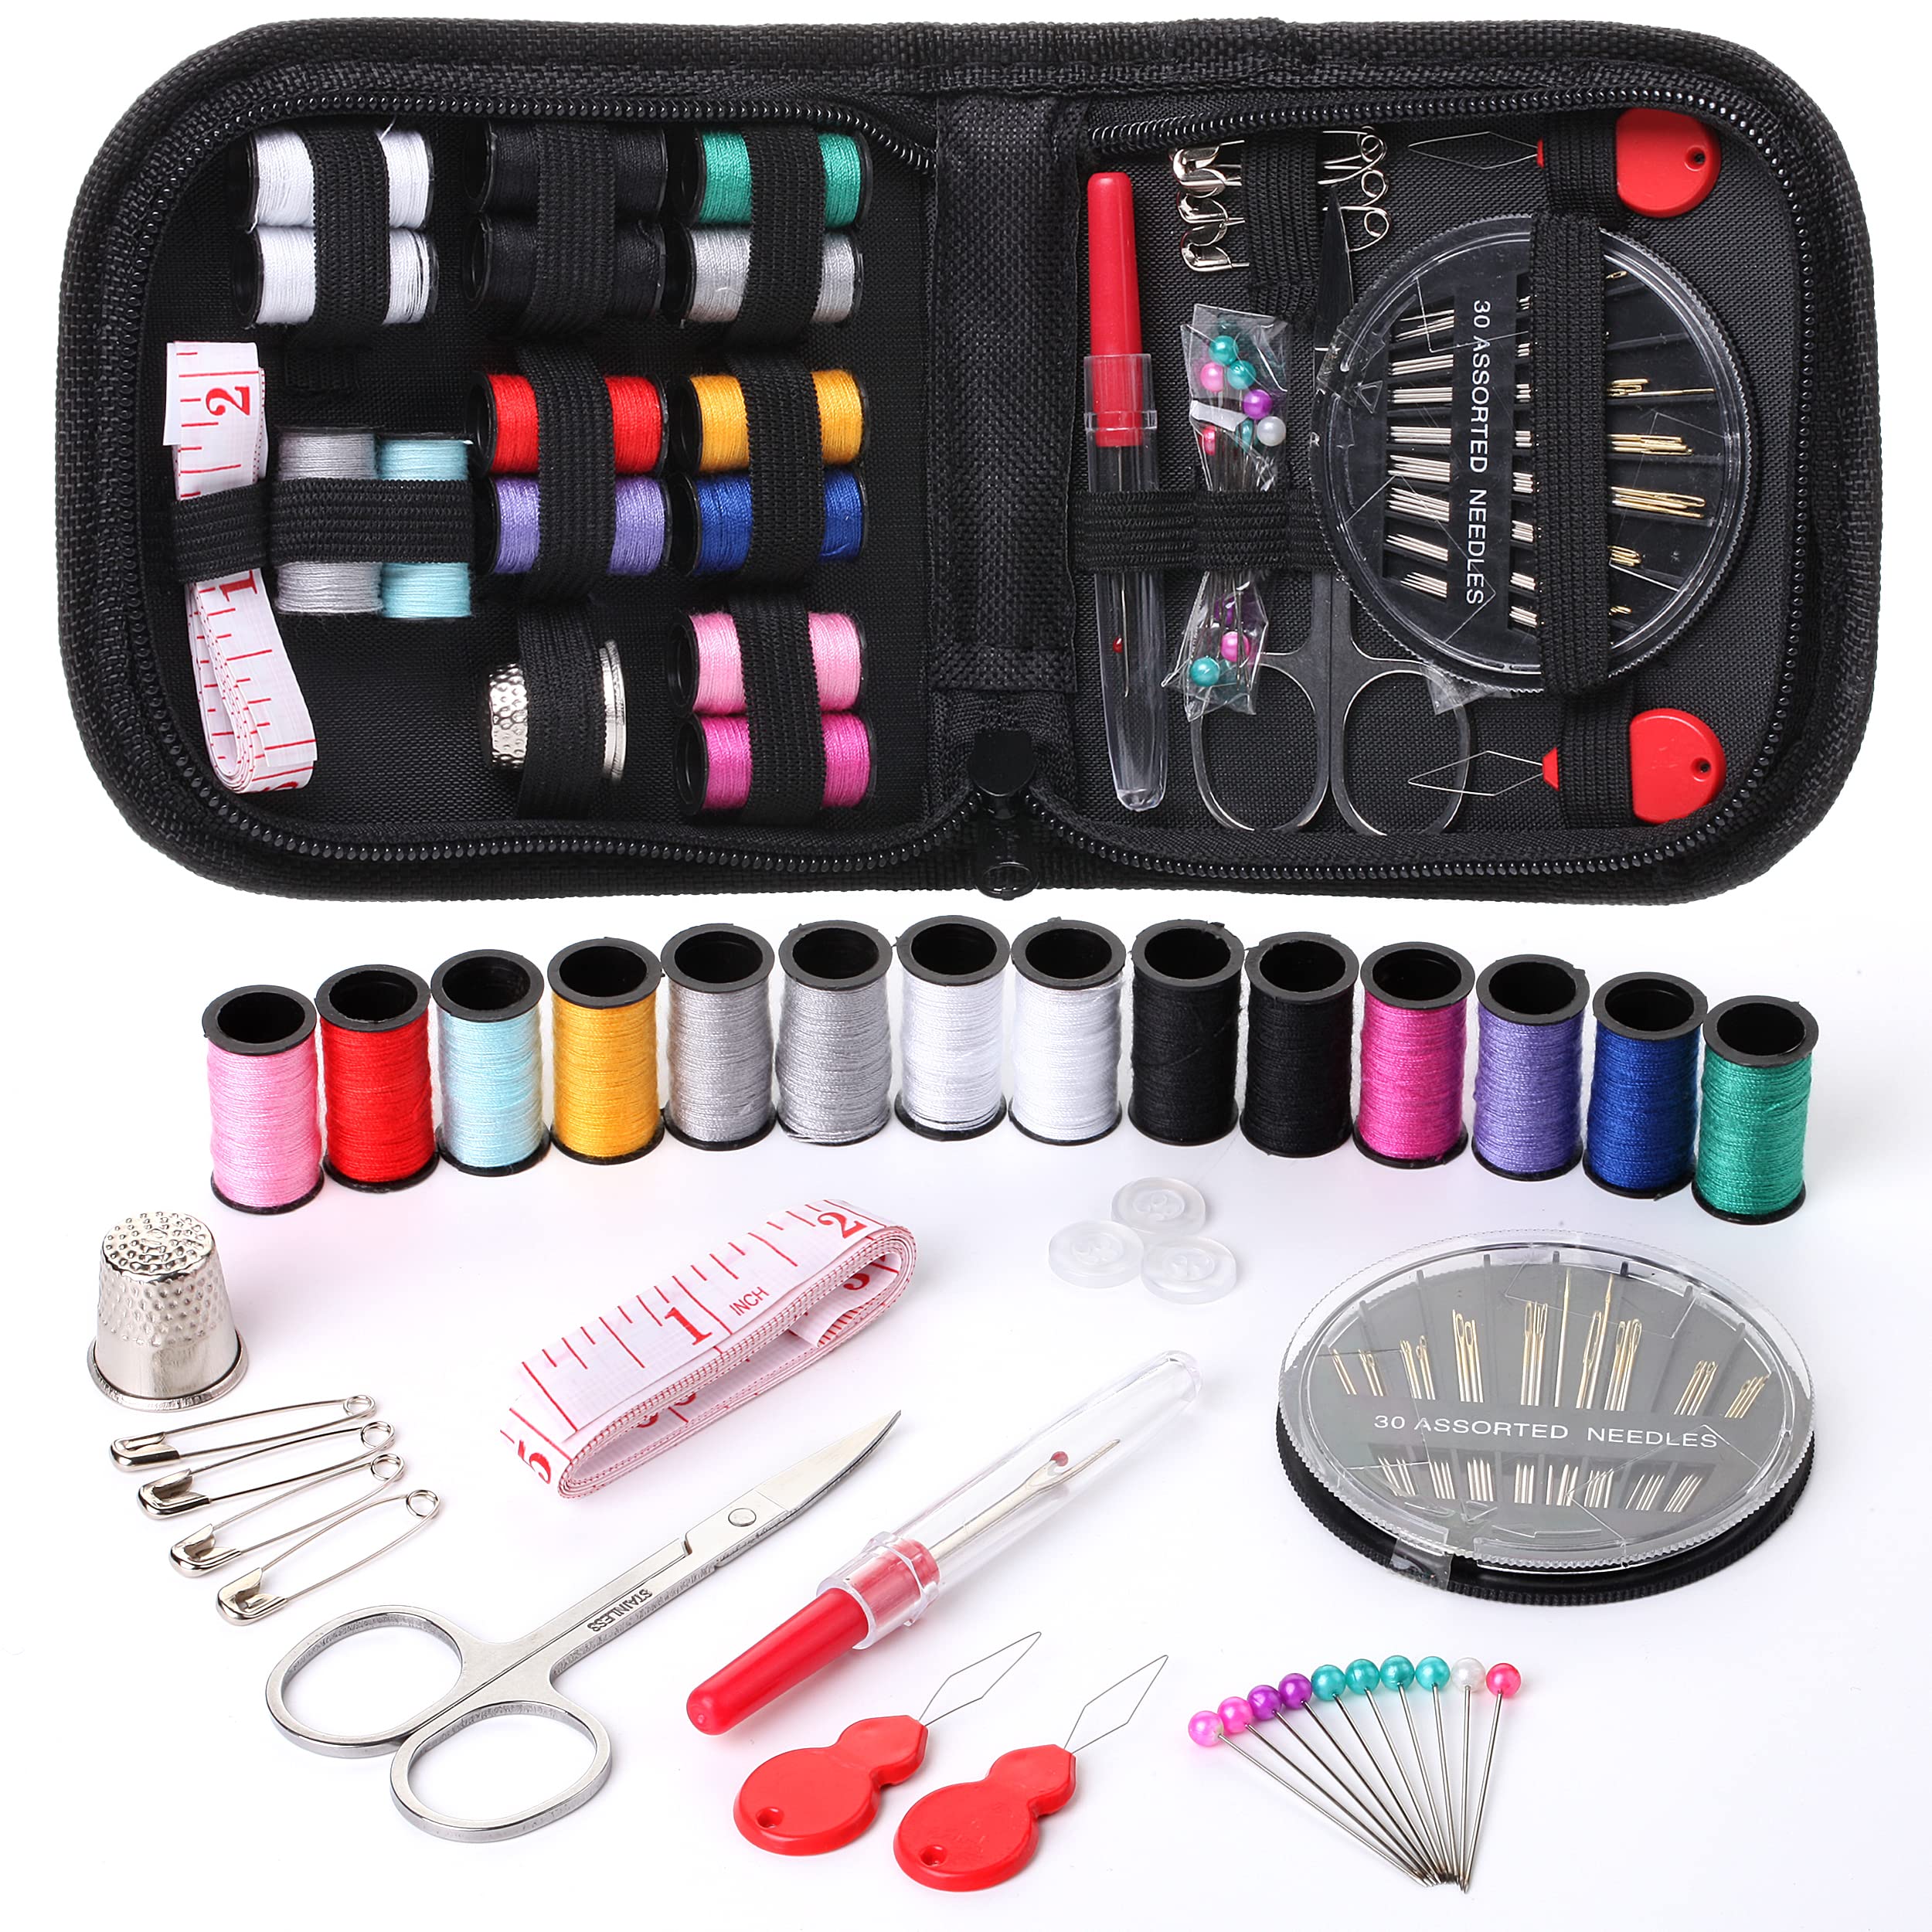  Mr. Pen- Sewing Kit, Sewing Kit for Adults, Travel Sewing Kit,  Needle and Thread Kit, Mini Sewing Kit, Sewing Kit for Beginners, Hand  Sewing Kit, Sewing Set, Basic Sewing Kit, Sewing